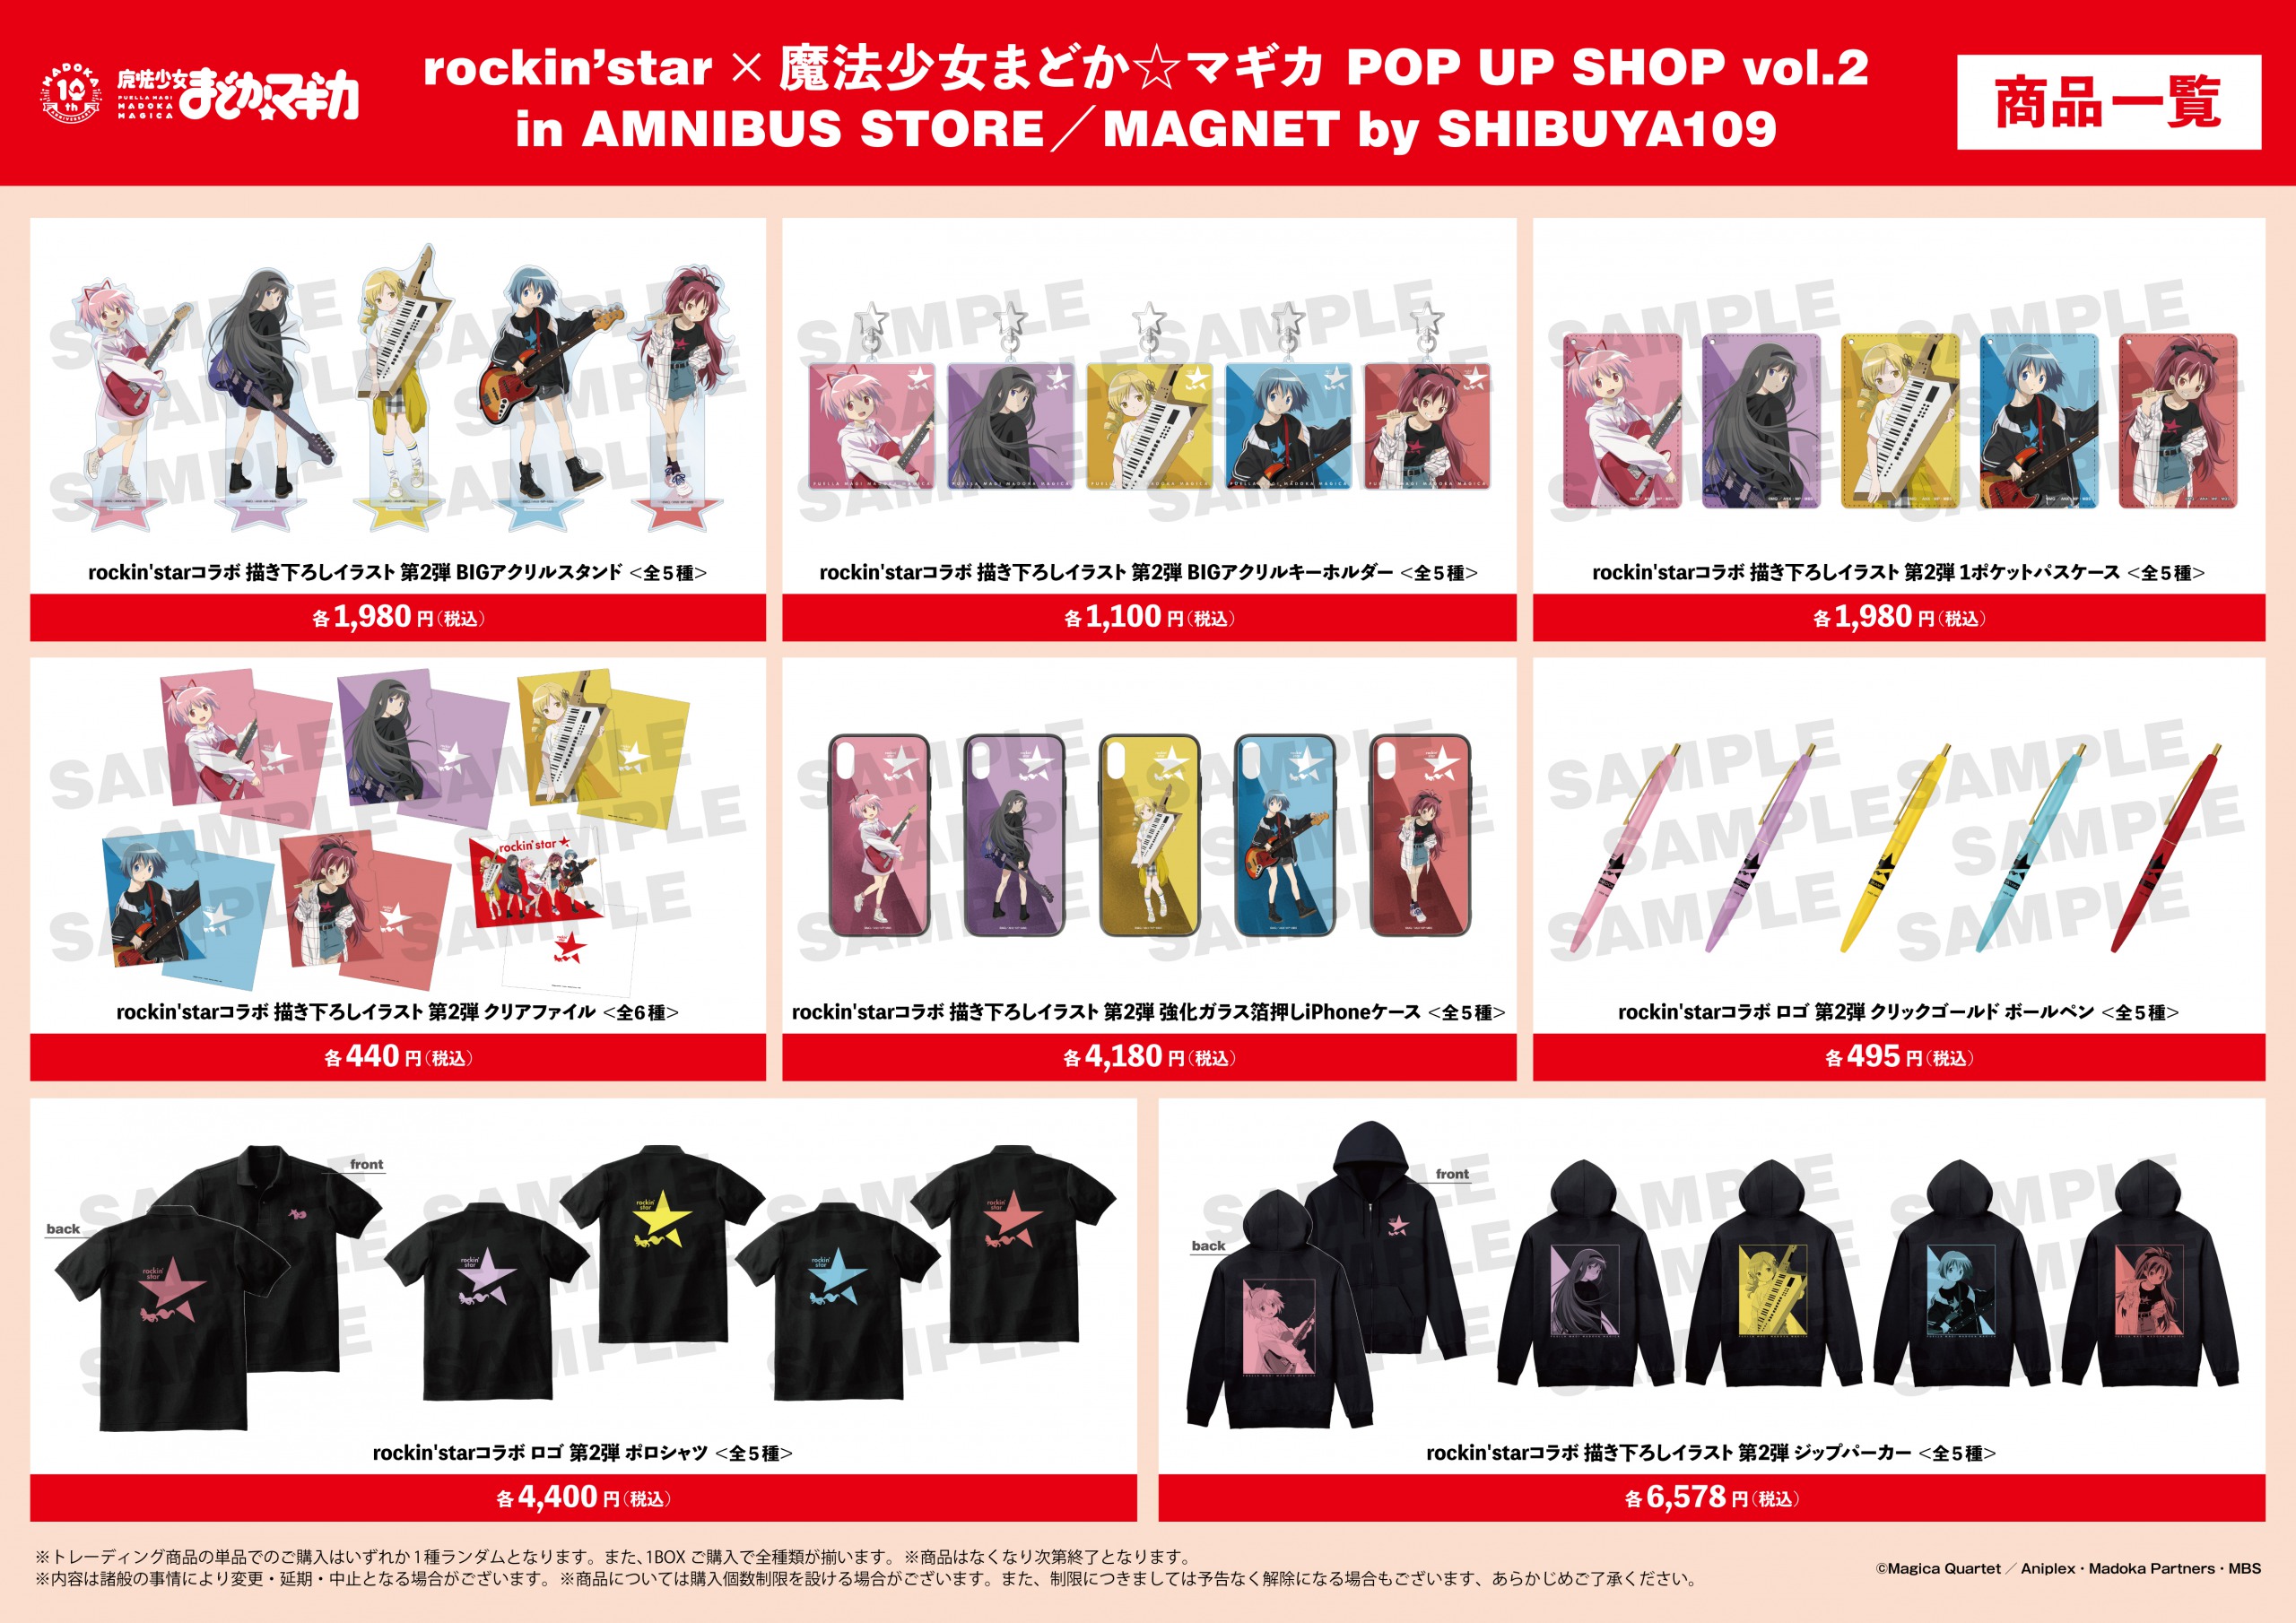 「rockin'star × 魔法少女まどか☆マギカ POP UP SHOP」商品ラインナップ2